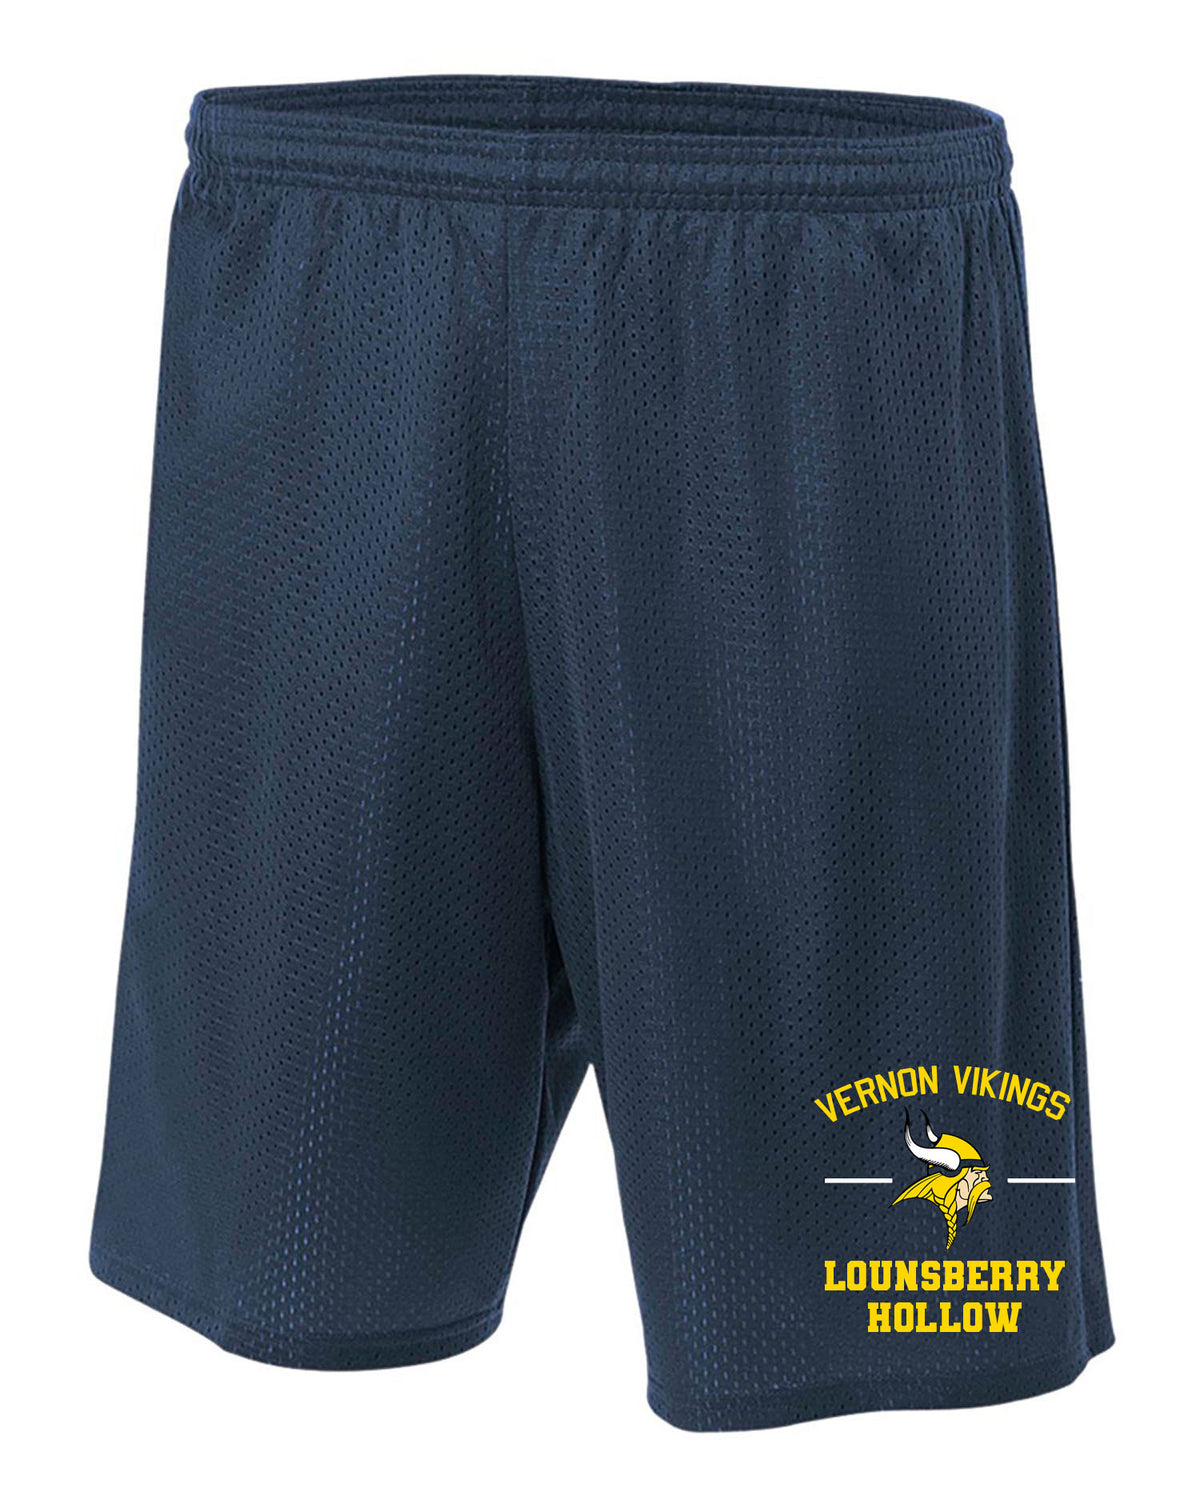 Lounsberry Hollow Design 2 Mesh Shorts